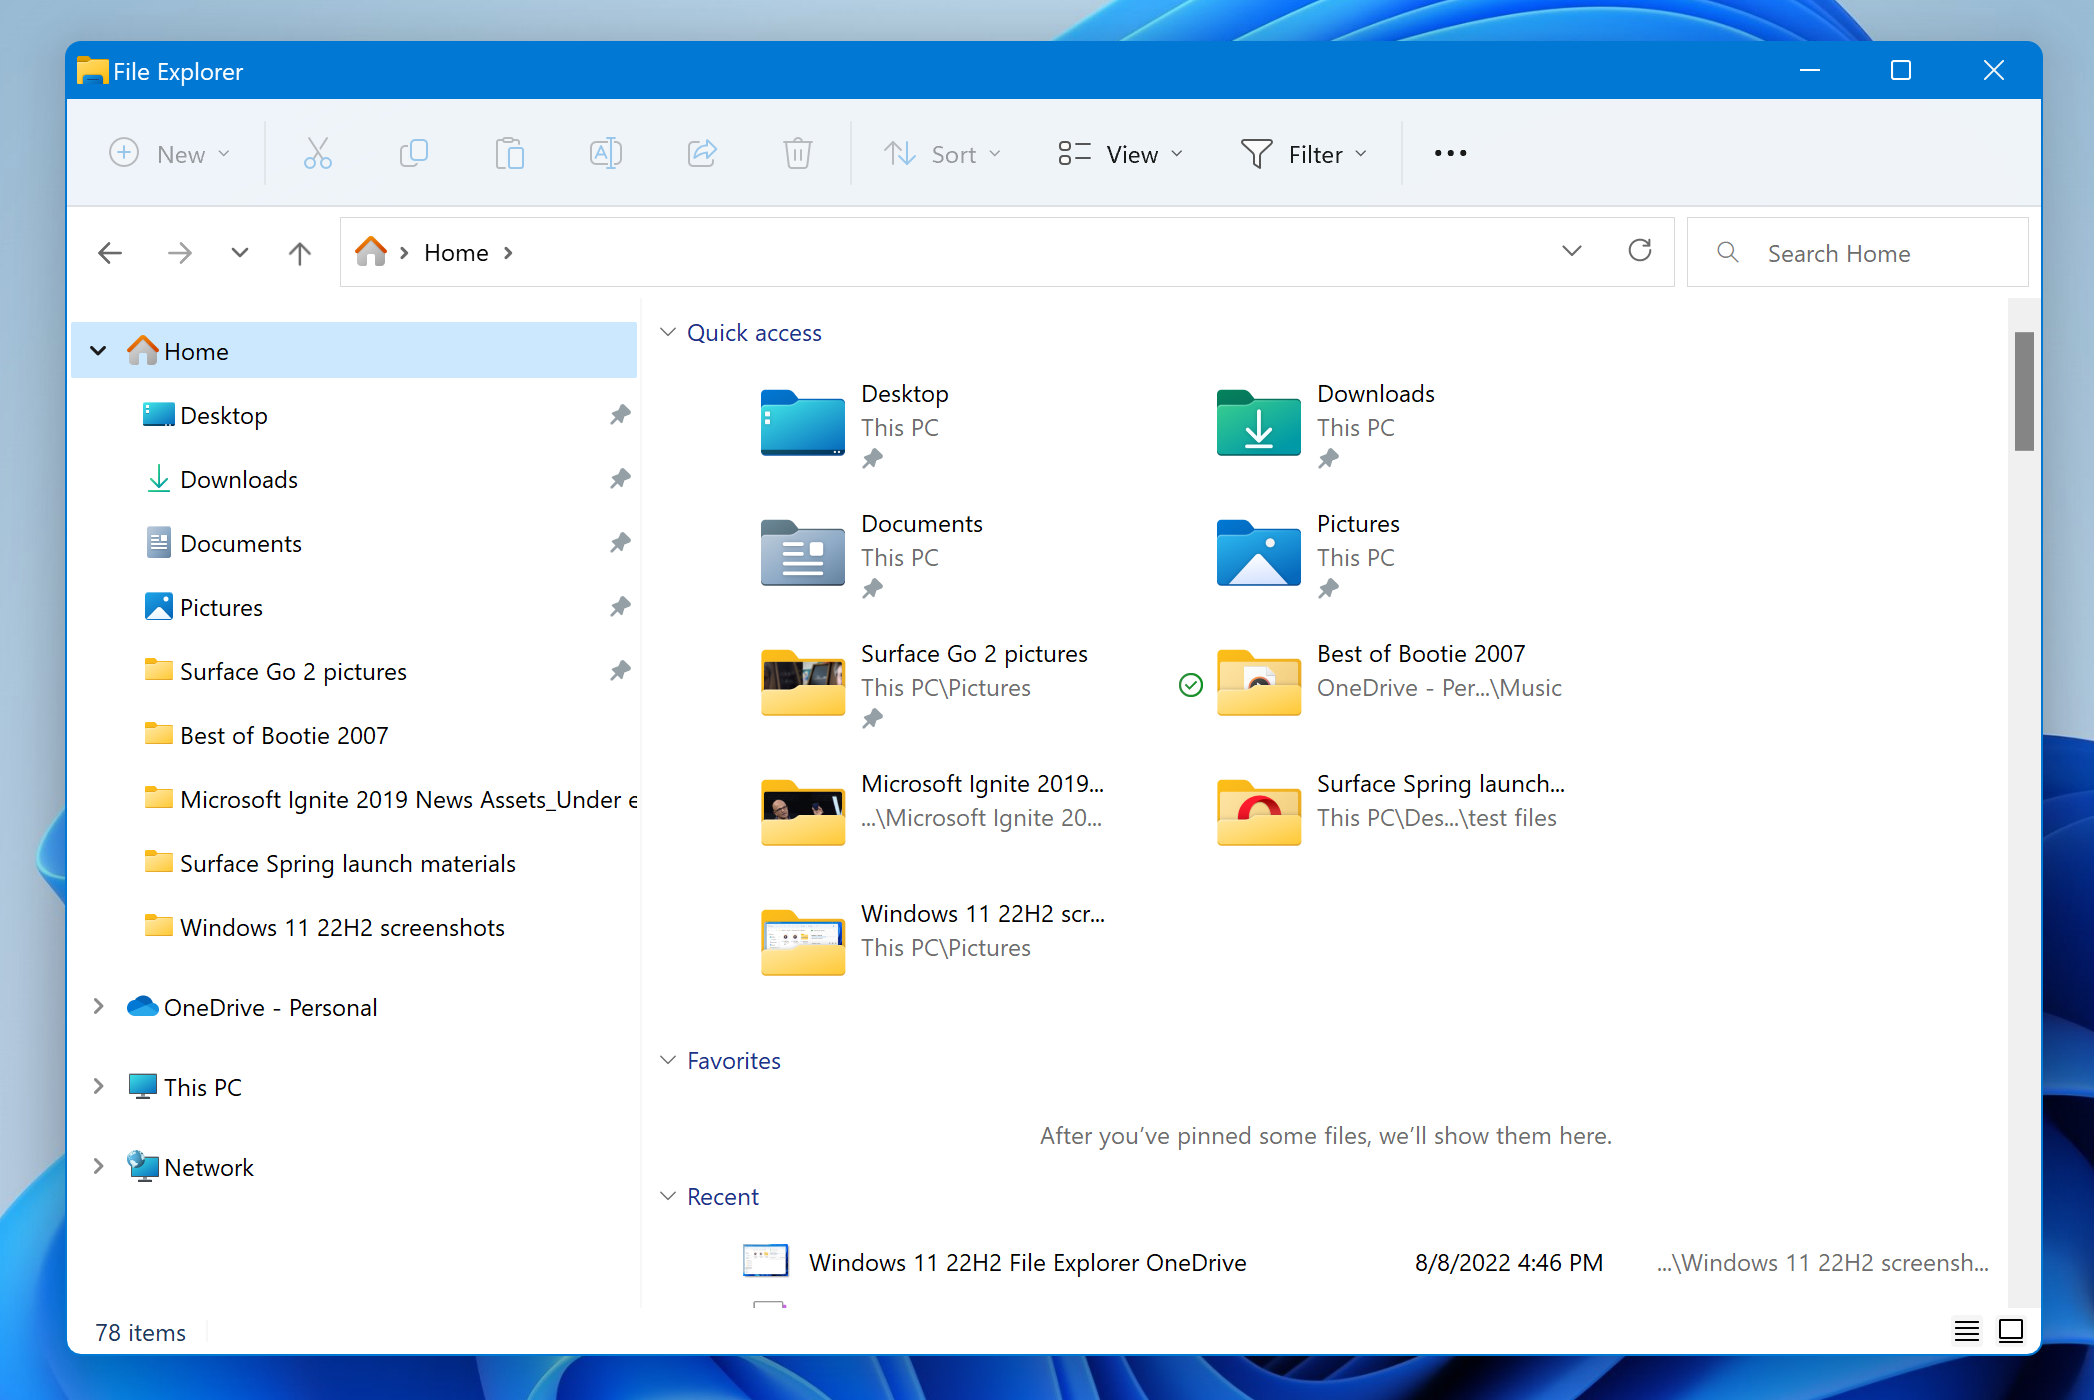 Windows 11 22H2 File Explorer 2